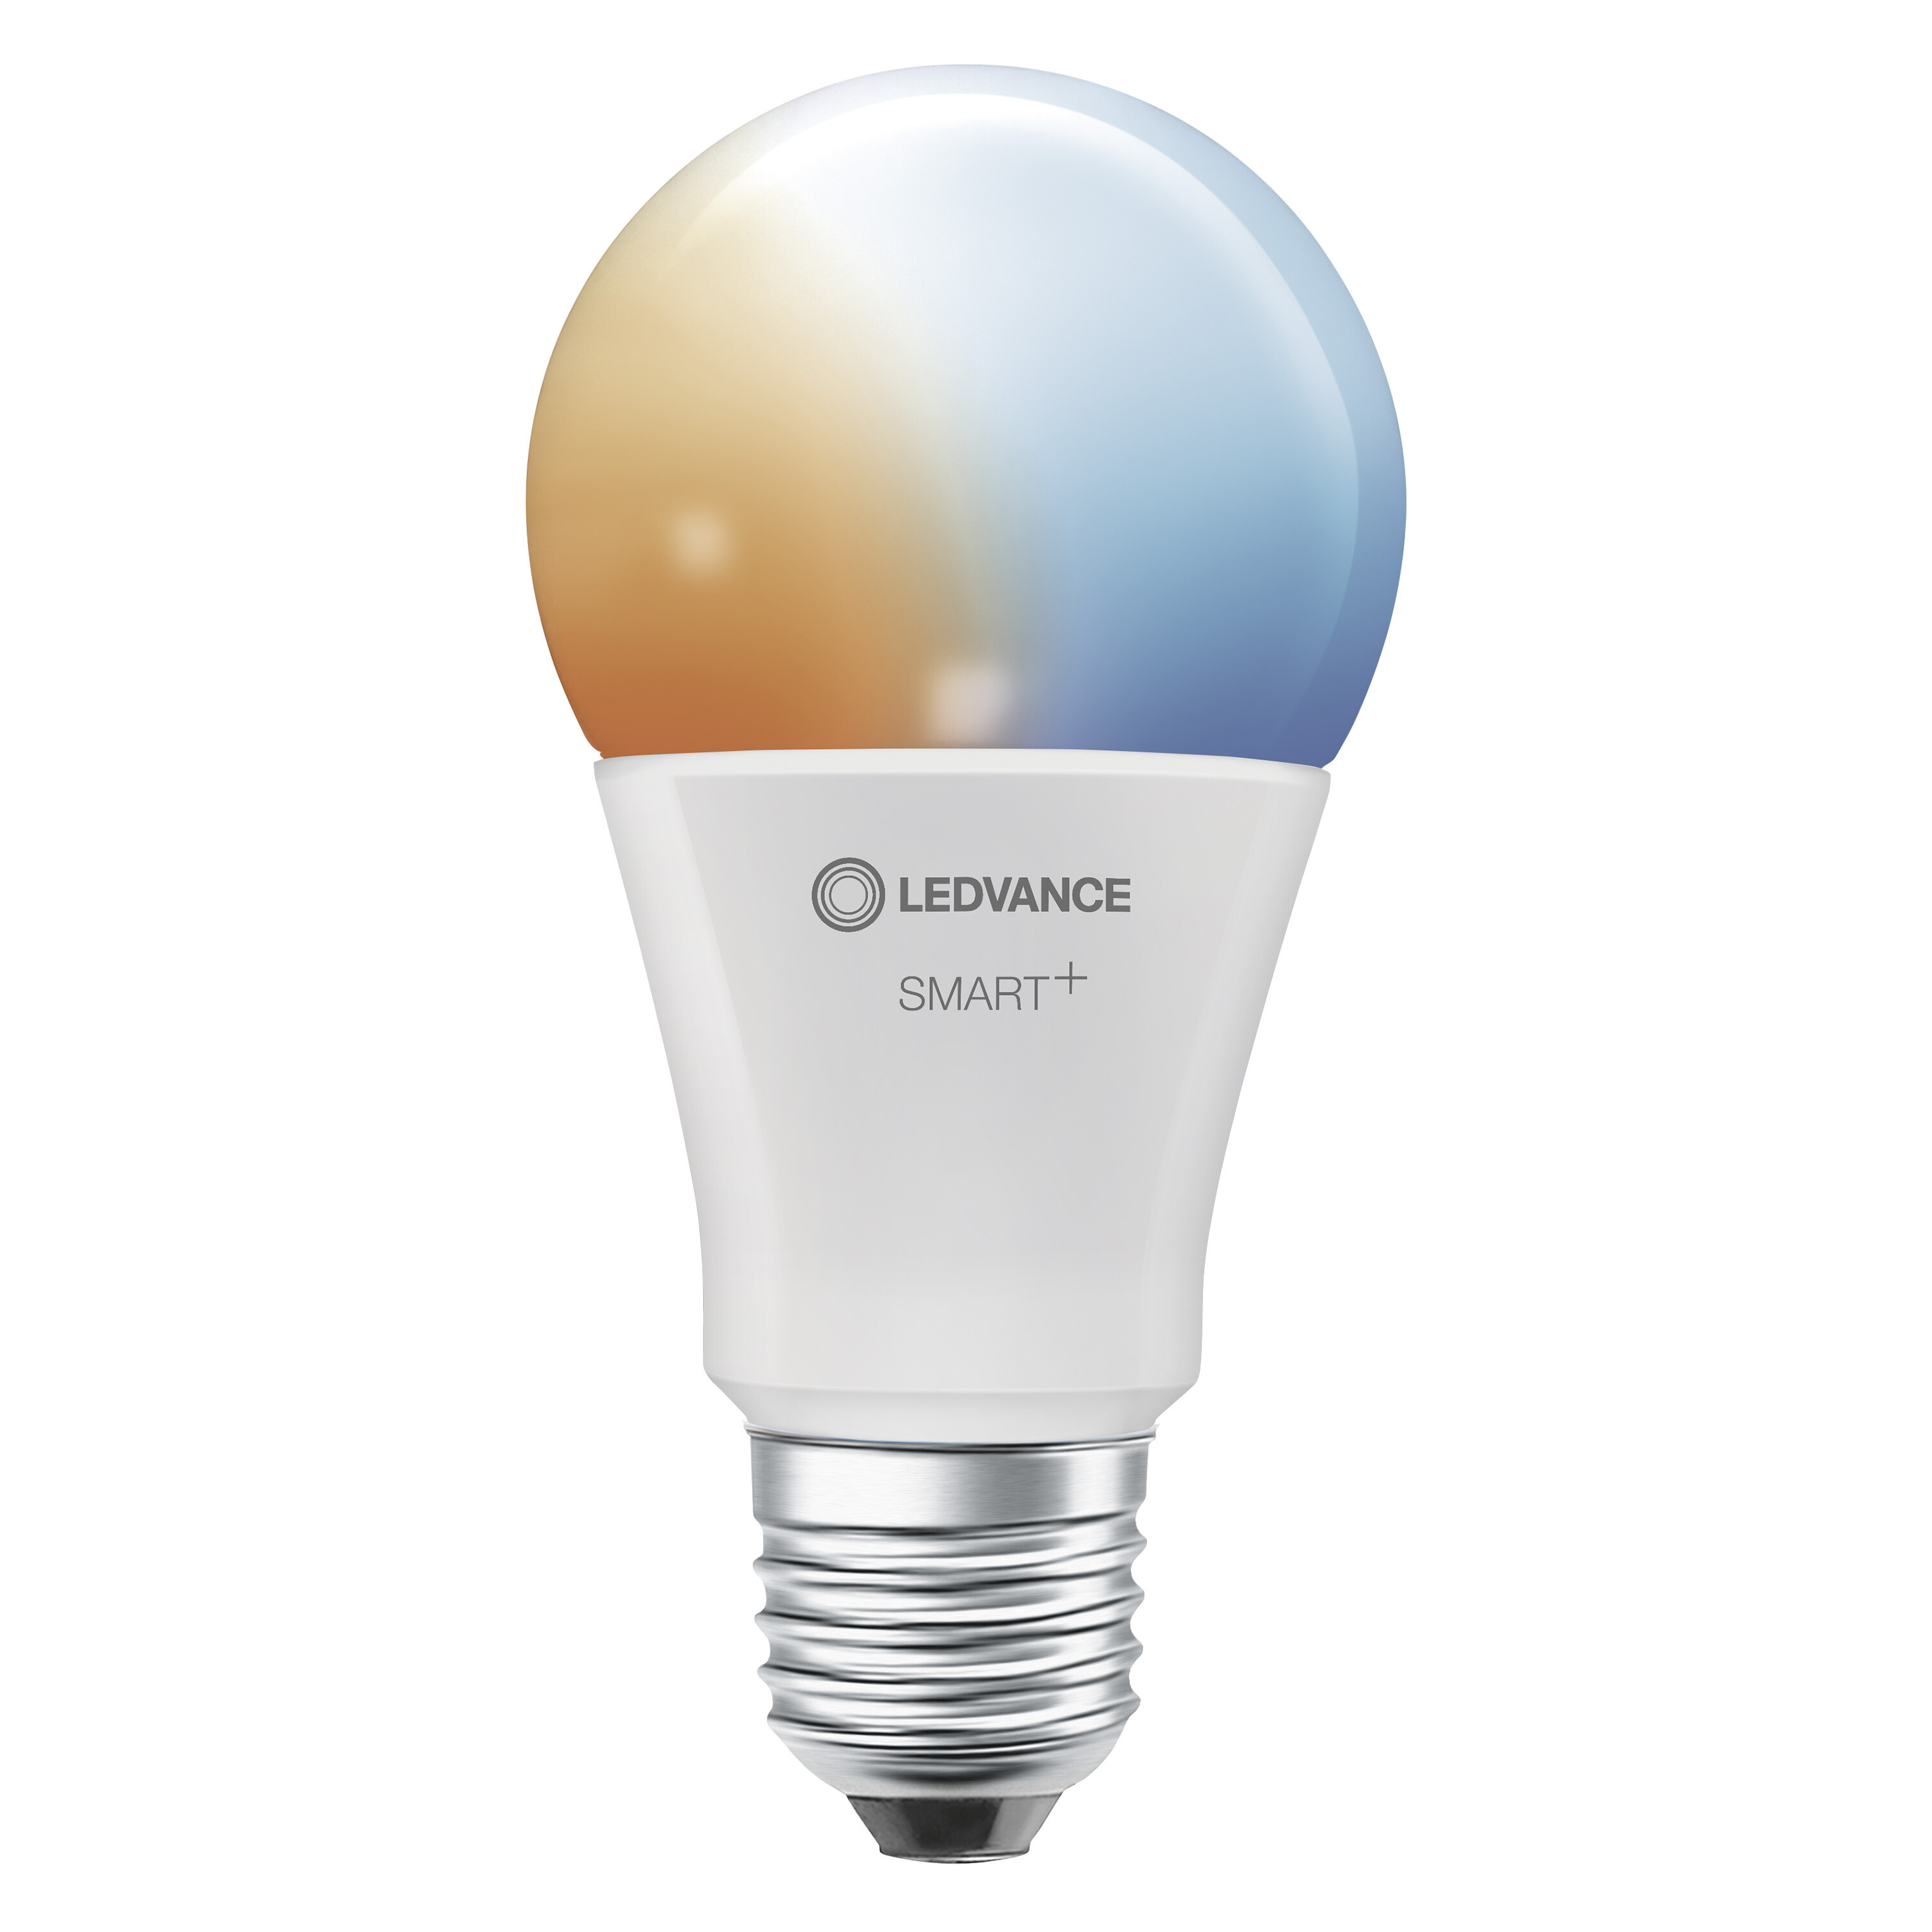 LEDVANCE SMART+ Classic Tunable White änderbar LED Lampe Lichtfarbe